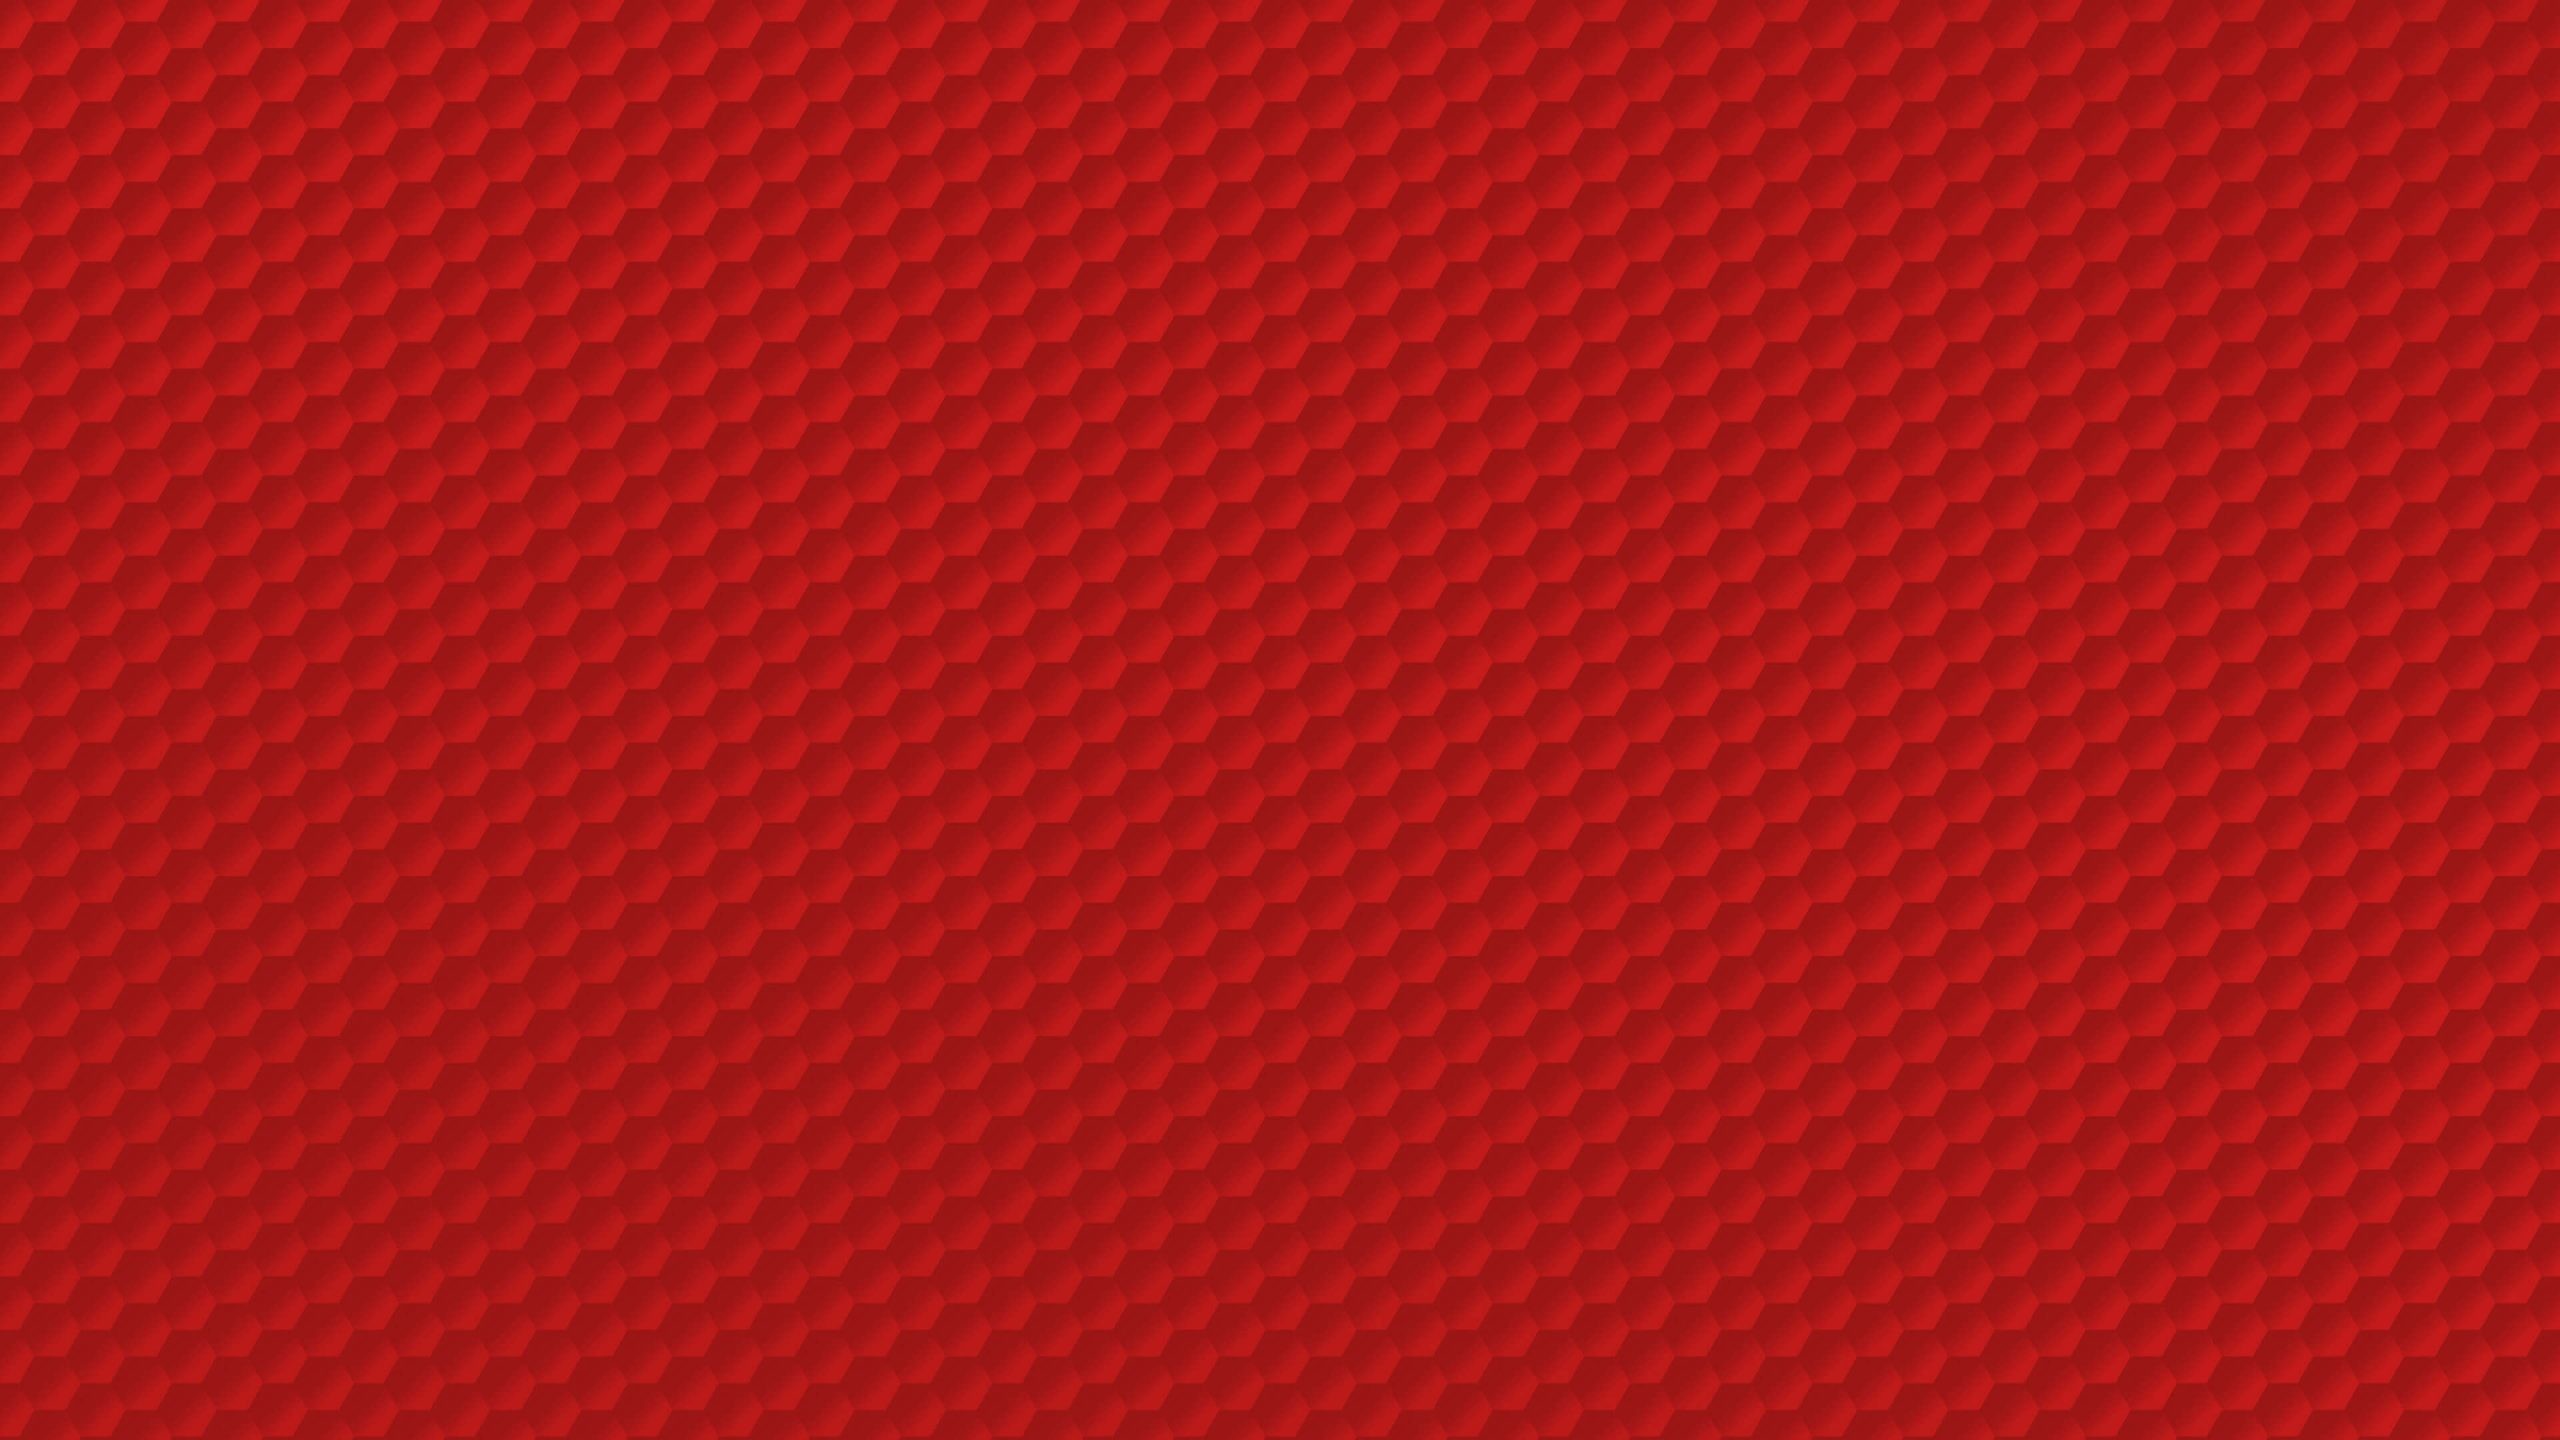 2560x1440 Red Honeycomb Pattern 4k full hd wallpaper - HD Wallpapers